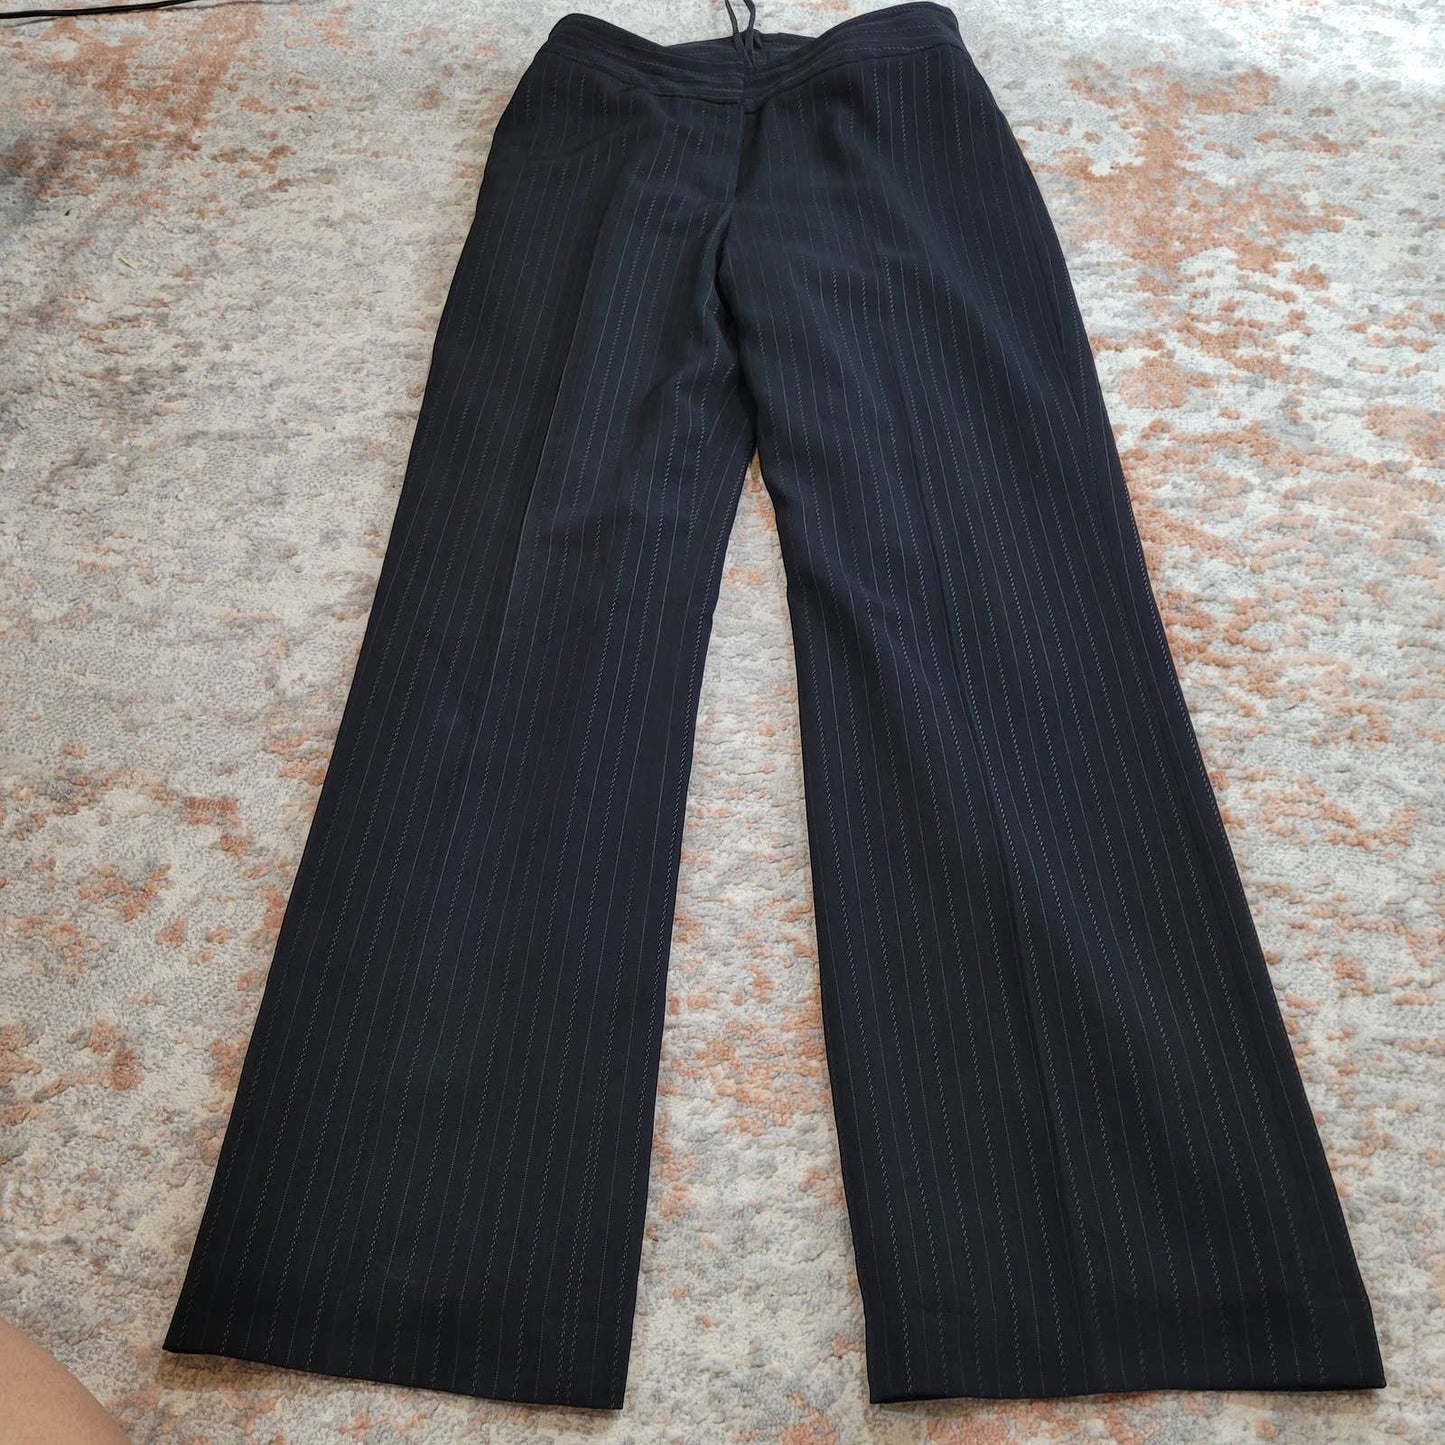 Jones New York Suit Black Striped Pants - Size 6